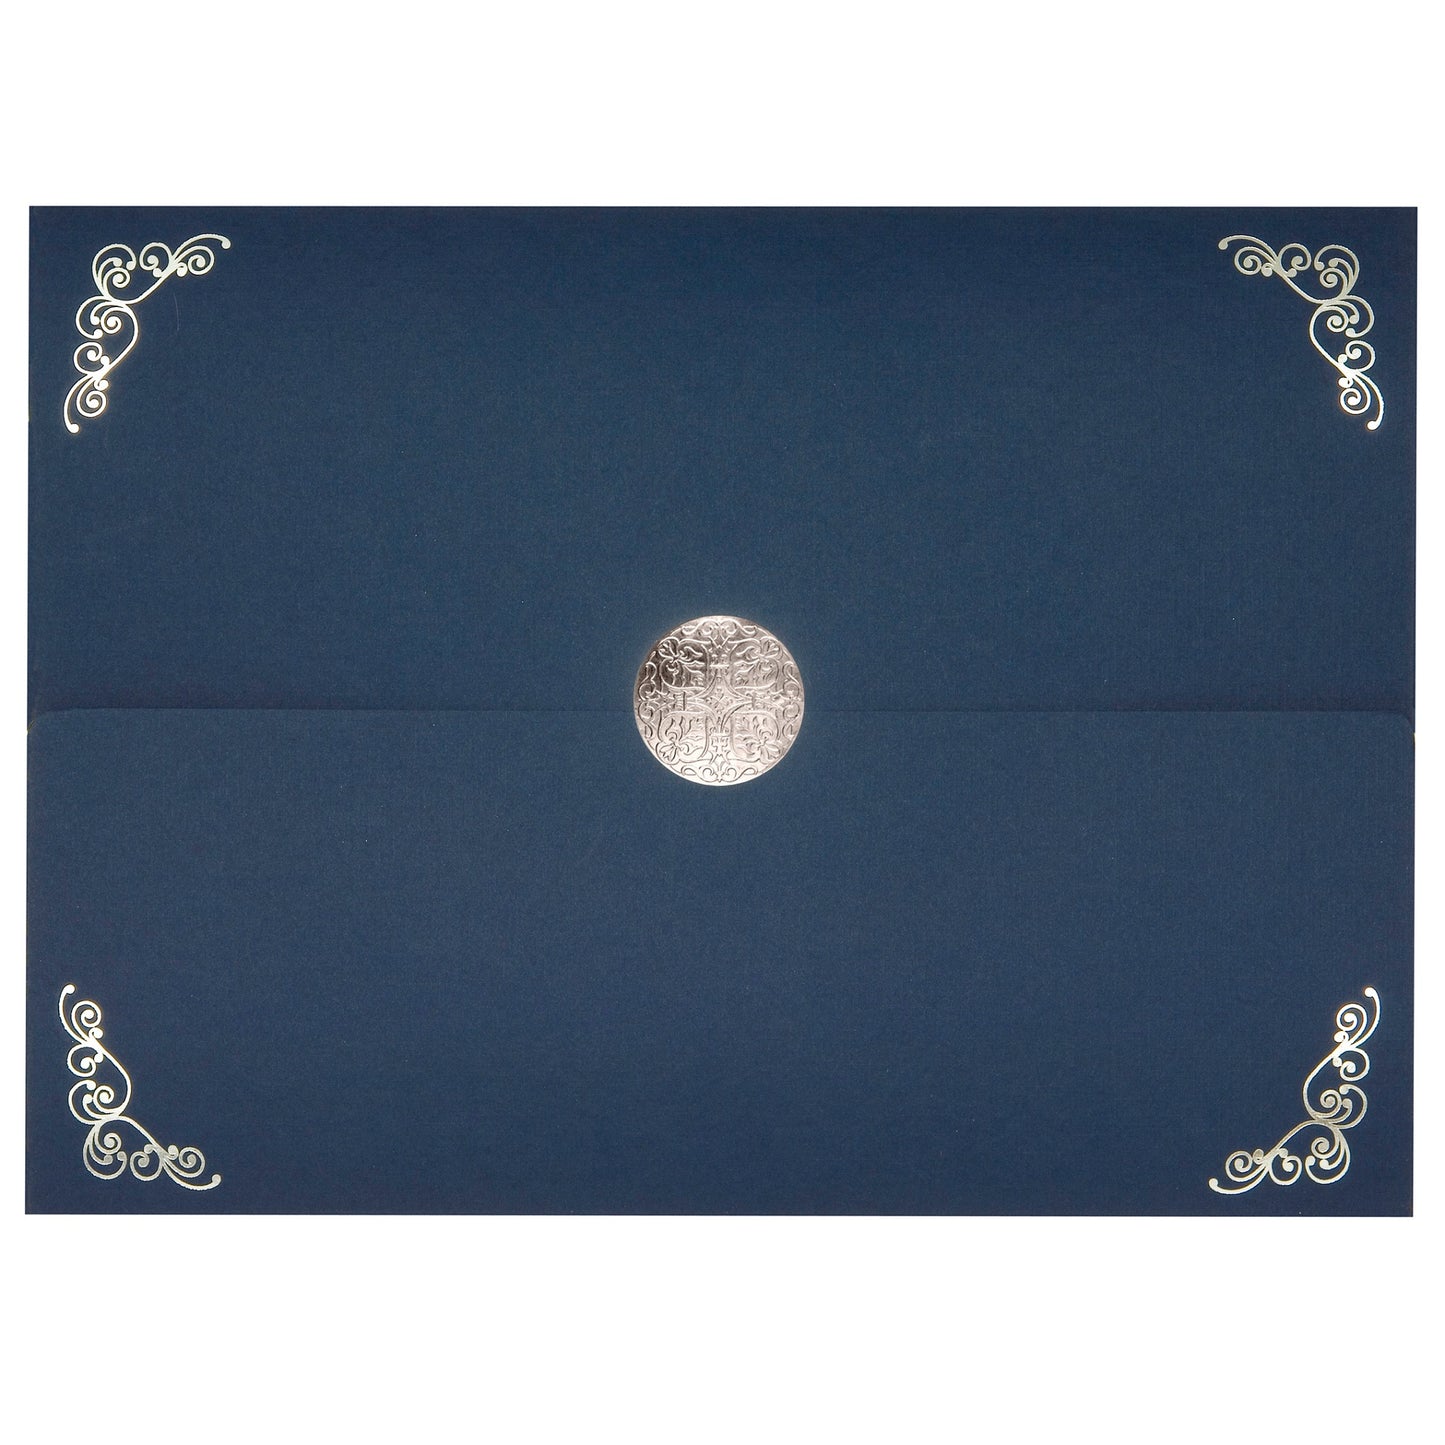 St. James® Elite™ Medallion Fold Certificate Holders, Linen, Navy Blue with Silver Medallion, Pack of 5